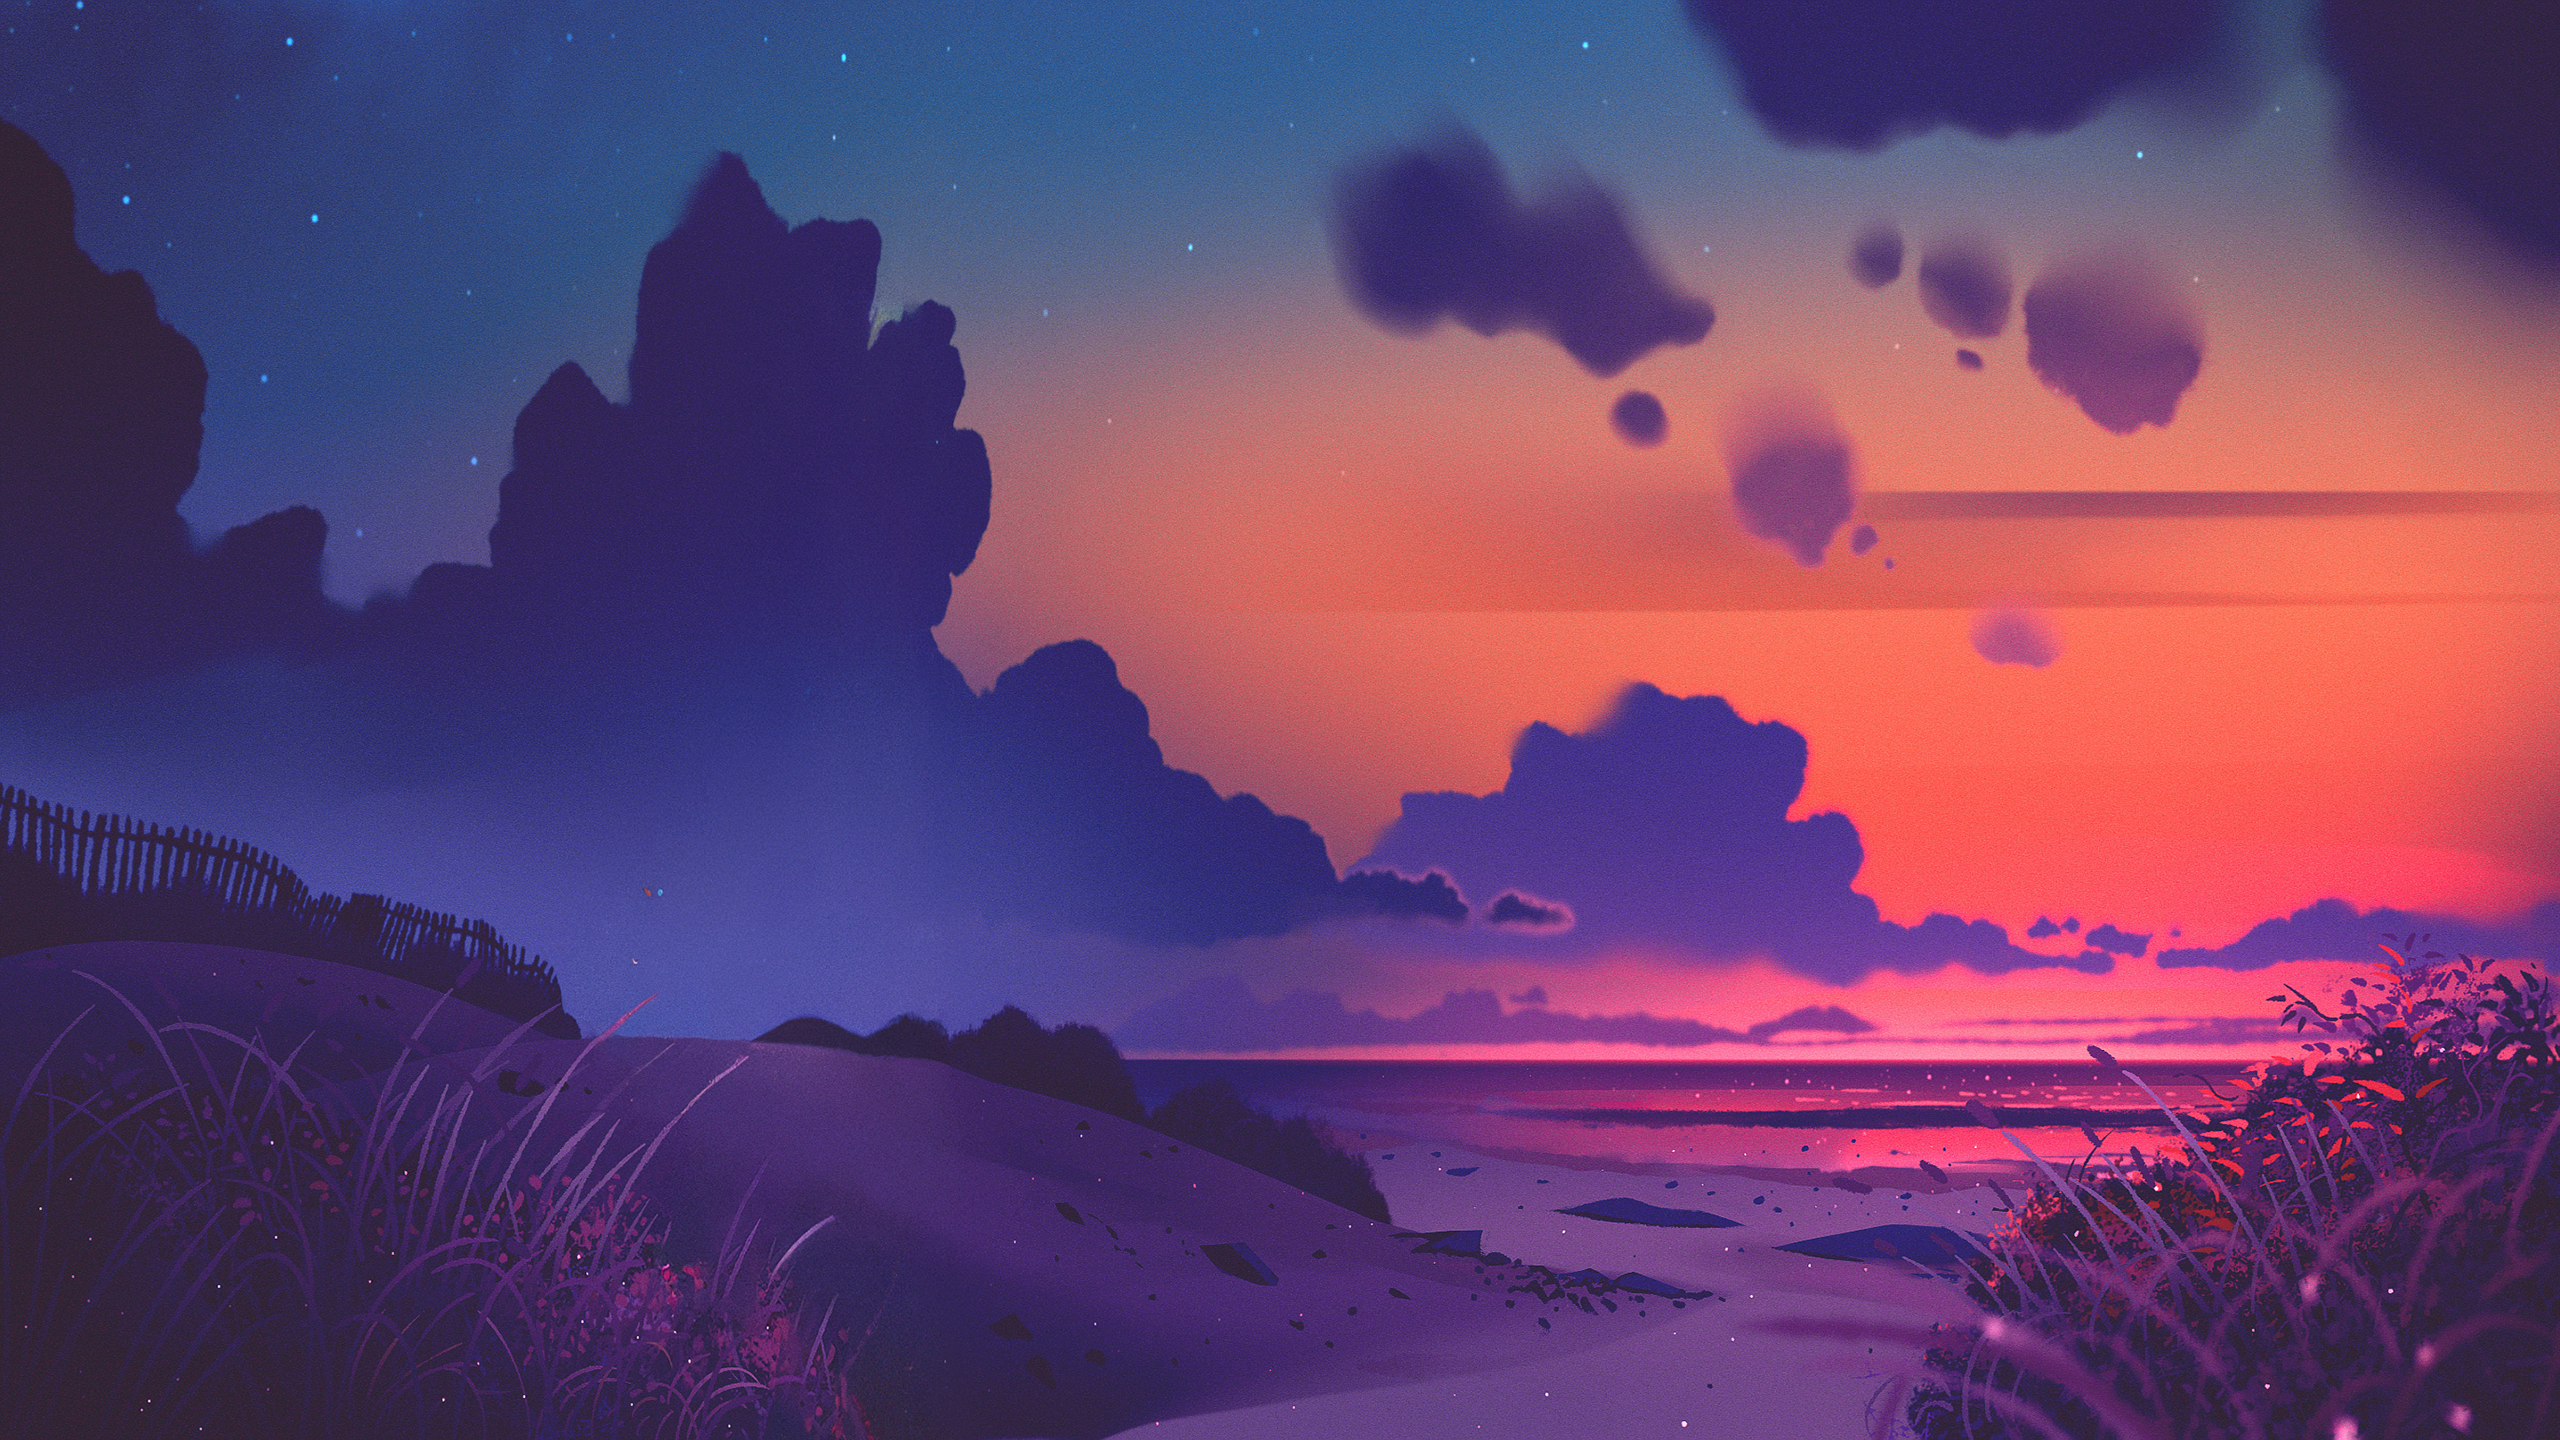 Digital Digital Art Artwork Illustration Landscape Nature Clouds Sunset Beach Sea Dunes Sand Plants  2560x1440